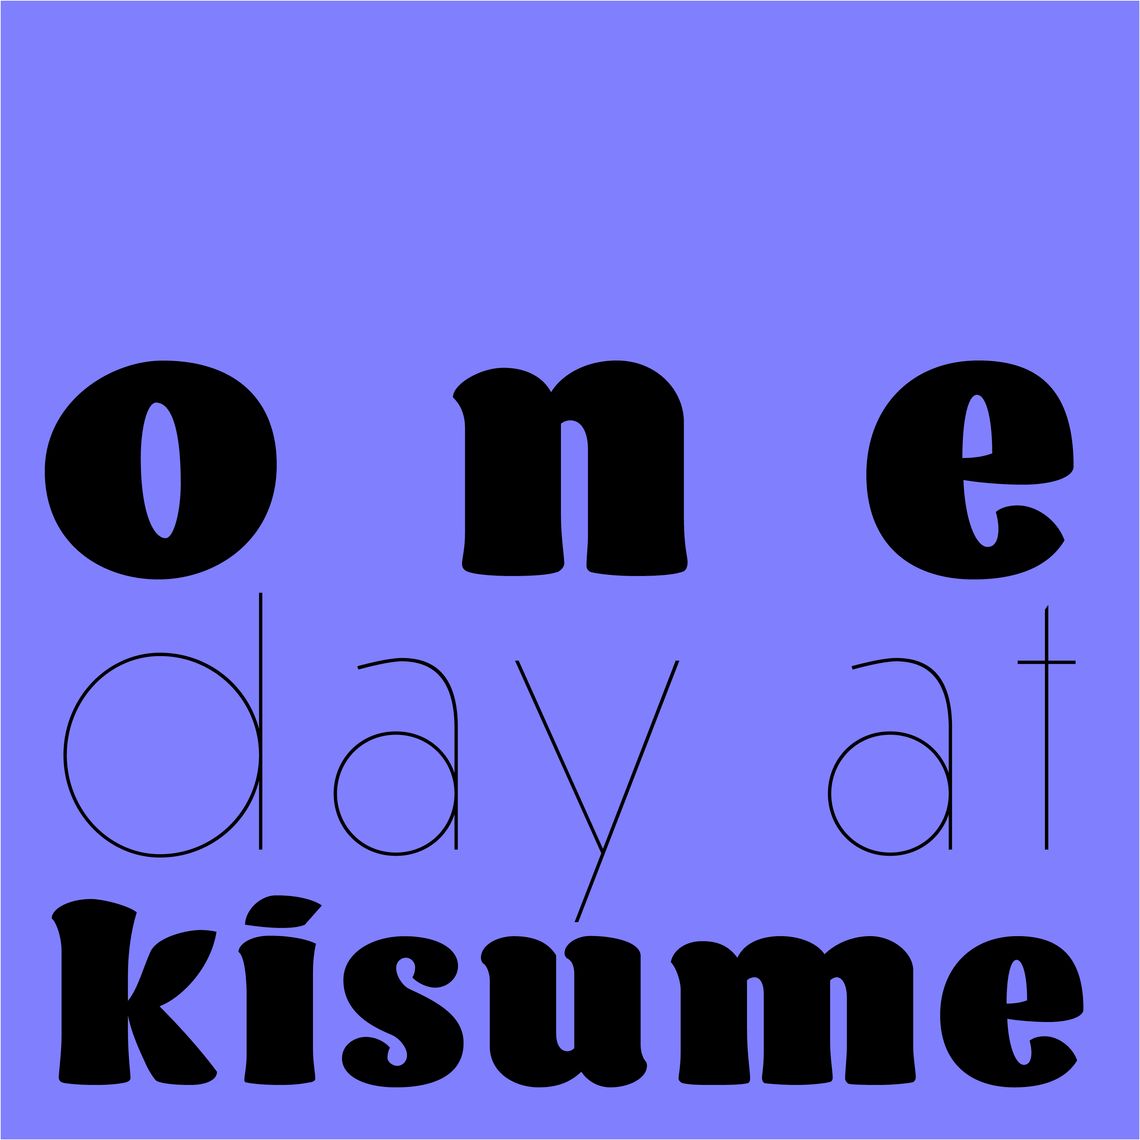 One Day at Kisume